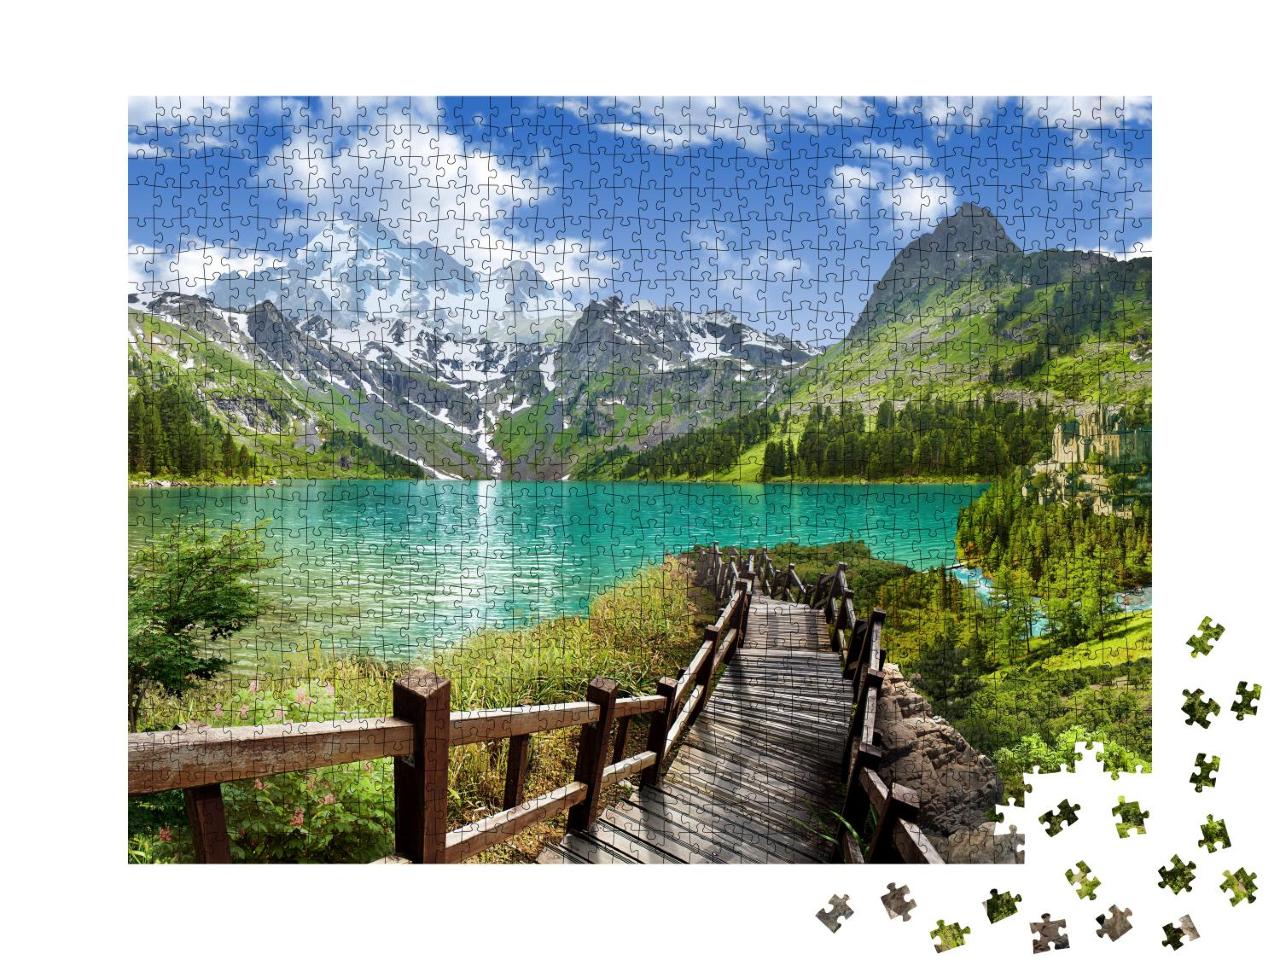 Puzzle 1000 Teile „Panoramablick auf den See in den Bergen“